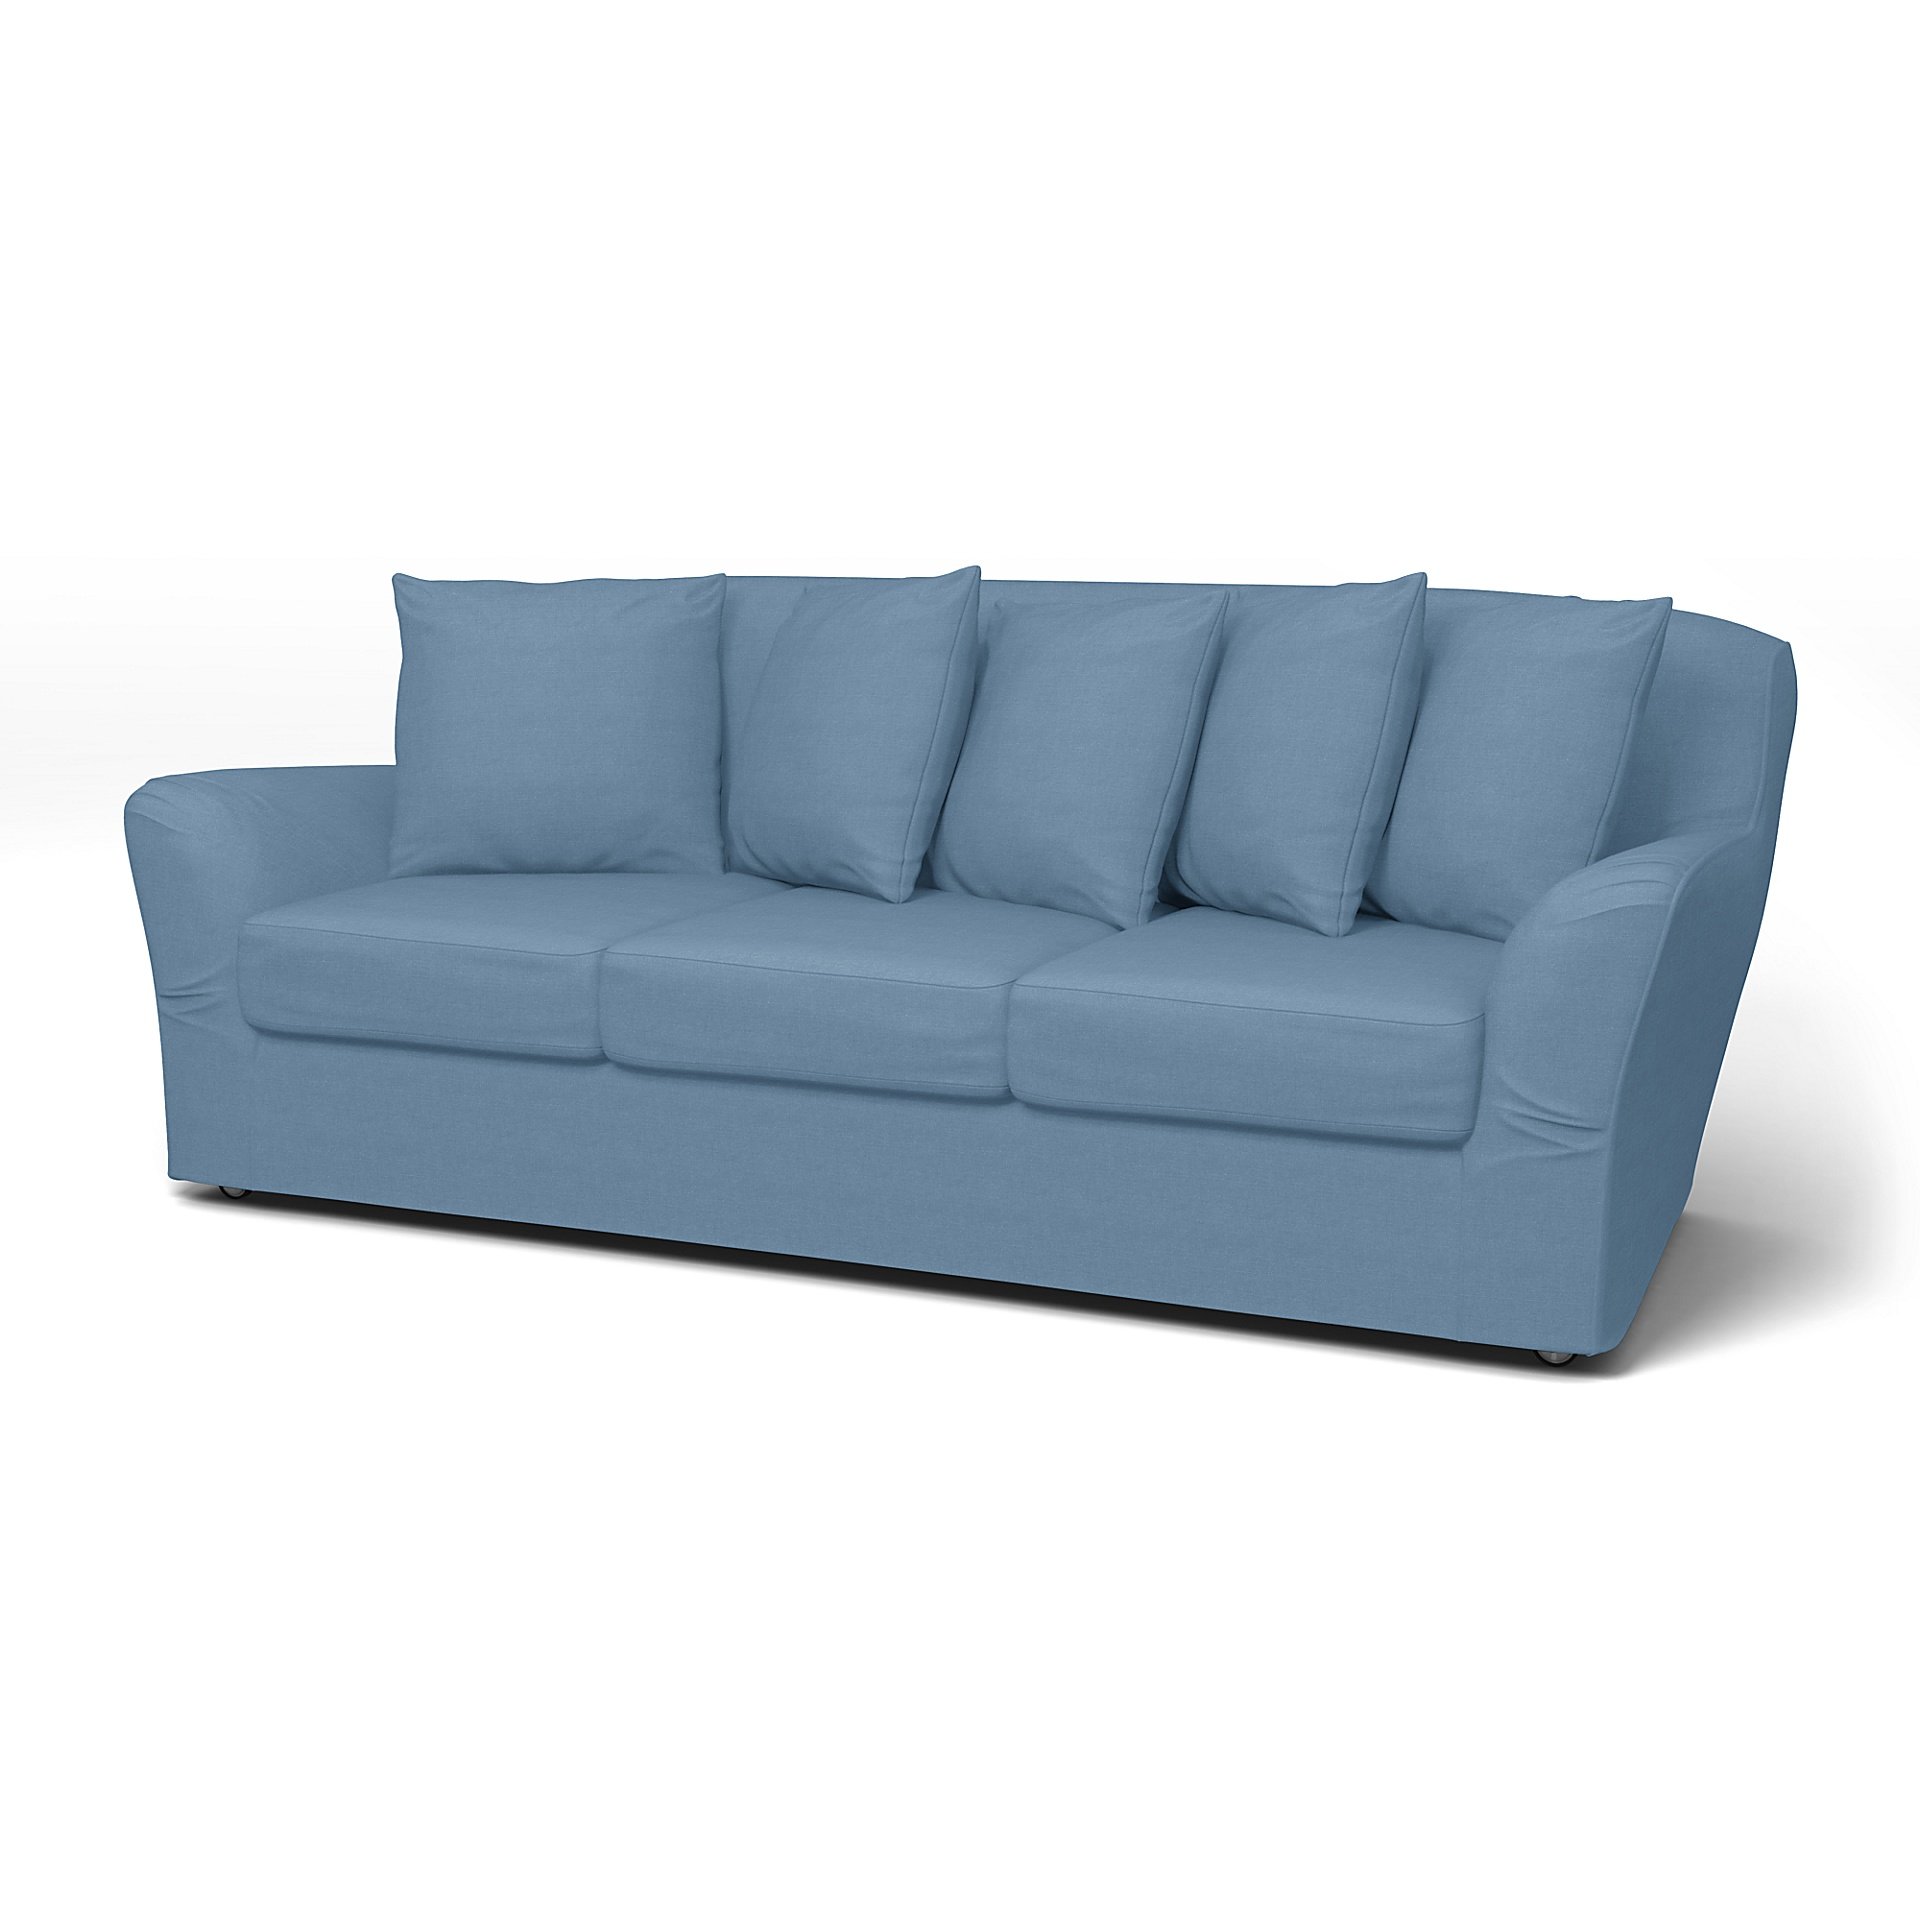 IKEA - Tomelilla 3 seater sofa, Vintage Blue, Linen - Bemz